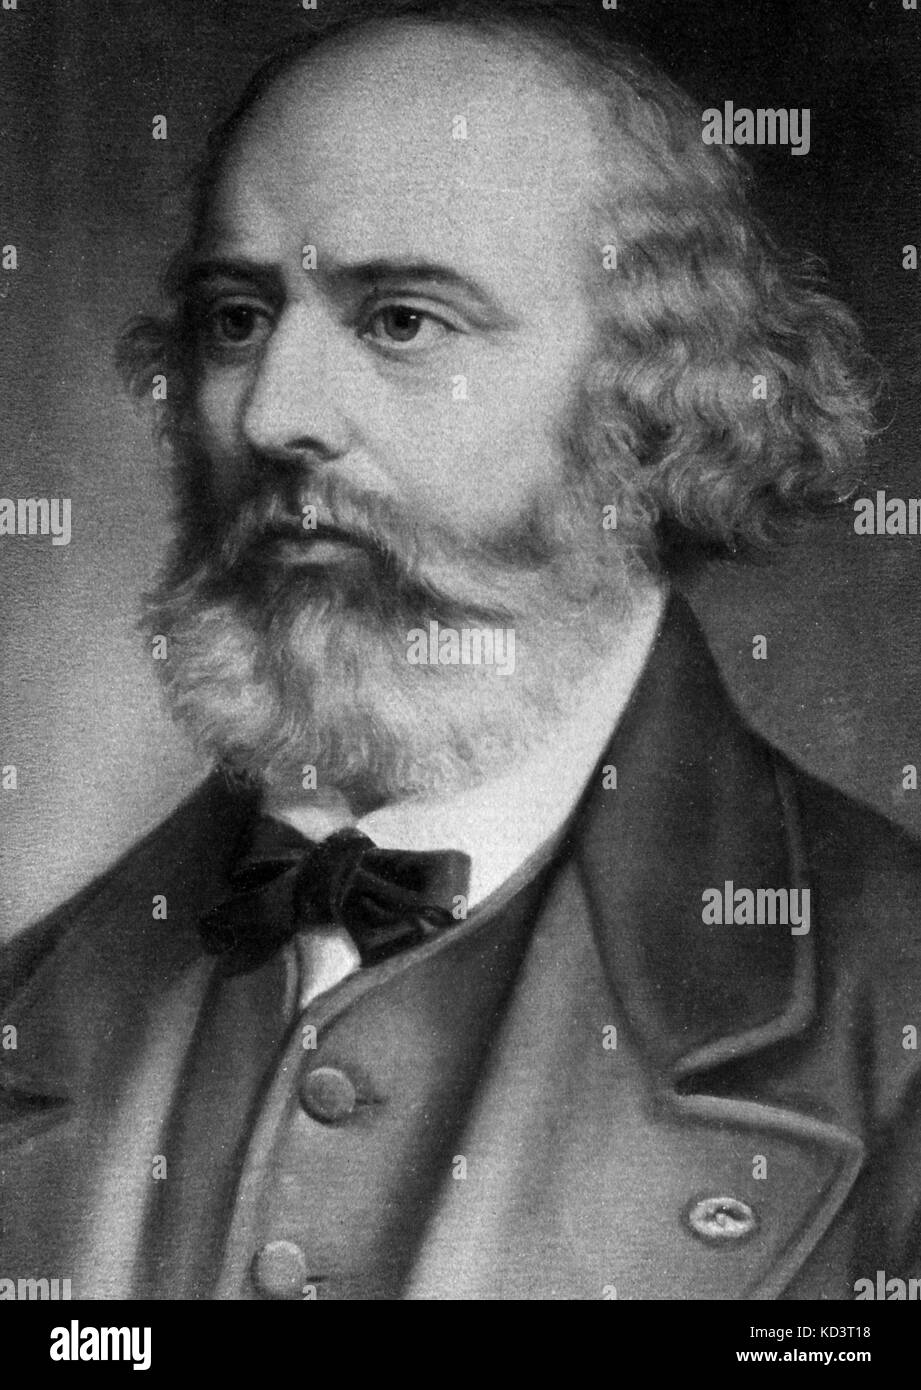 DAVID, Felicien - portrait French composer, 1810-1876 Stock Photo